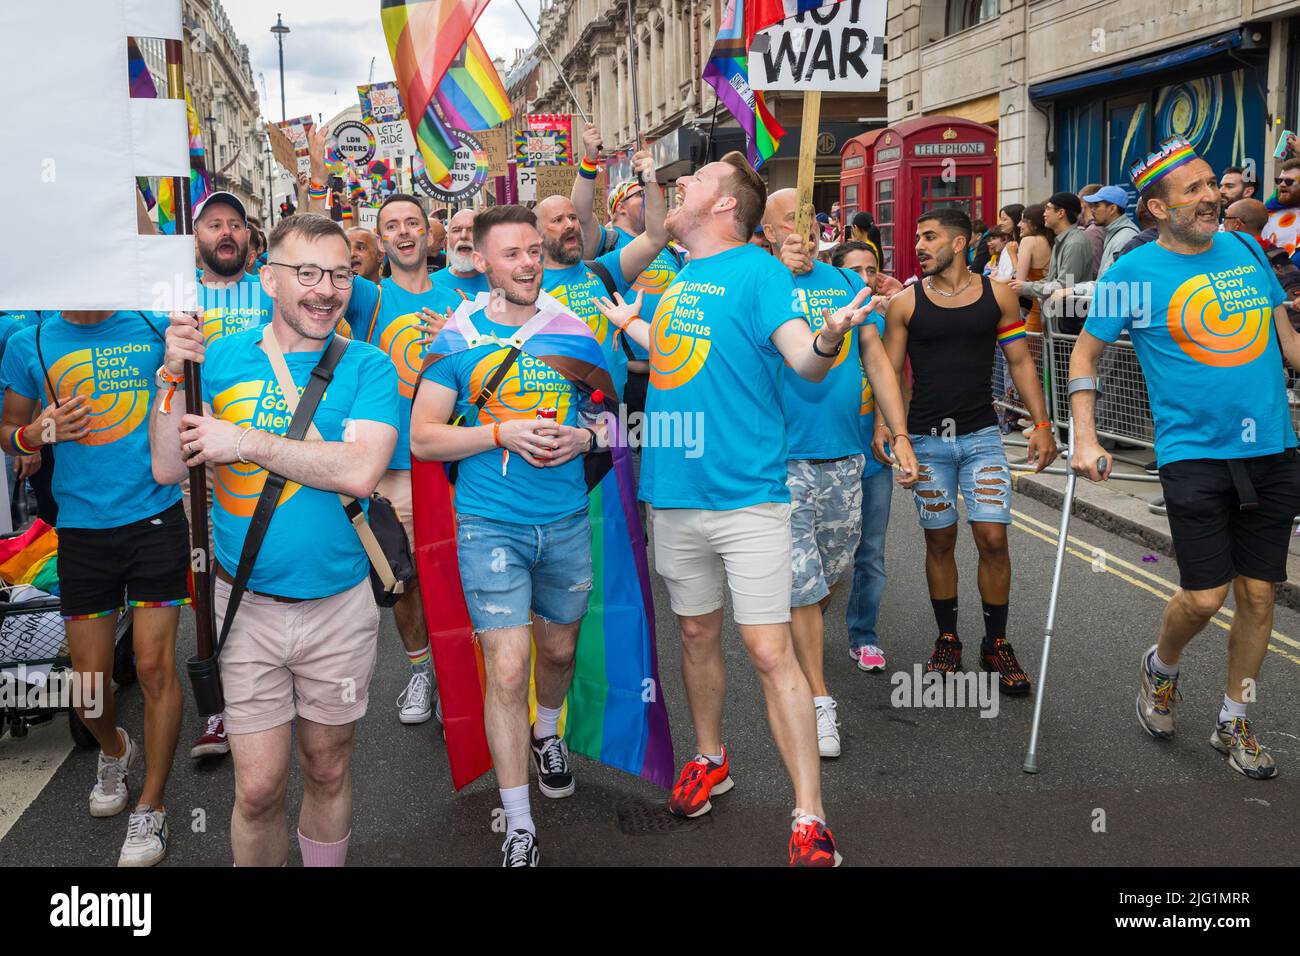 Members of the London Gay Men's Chorus taking part in the Pride parade Stock Photo